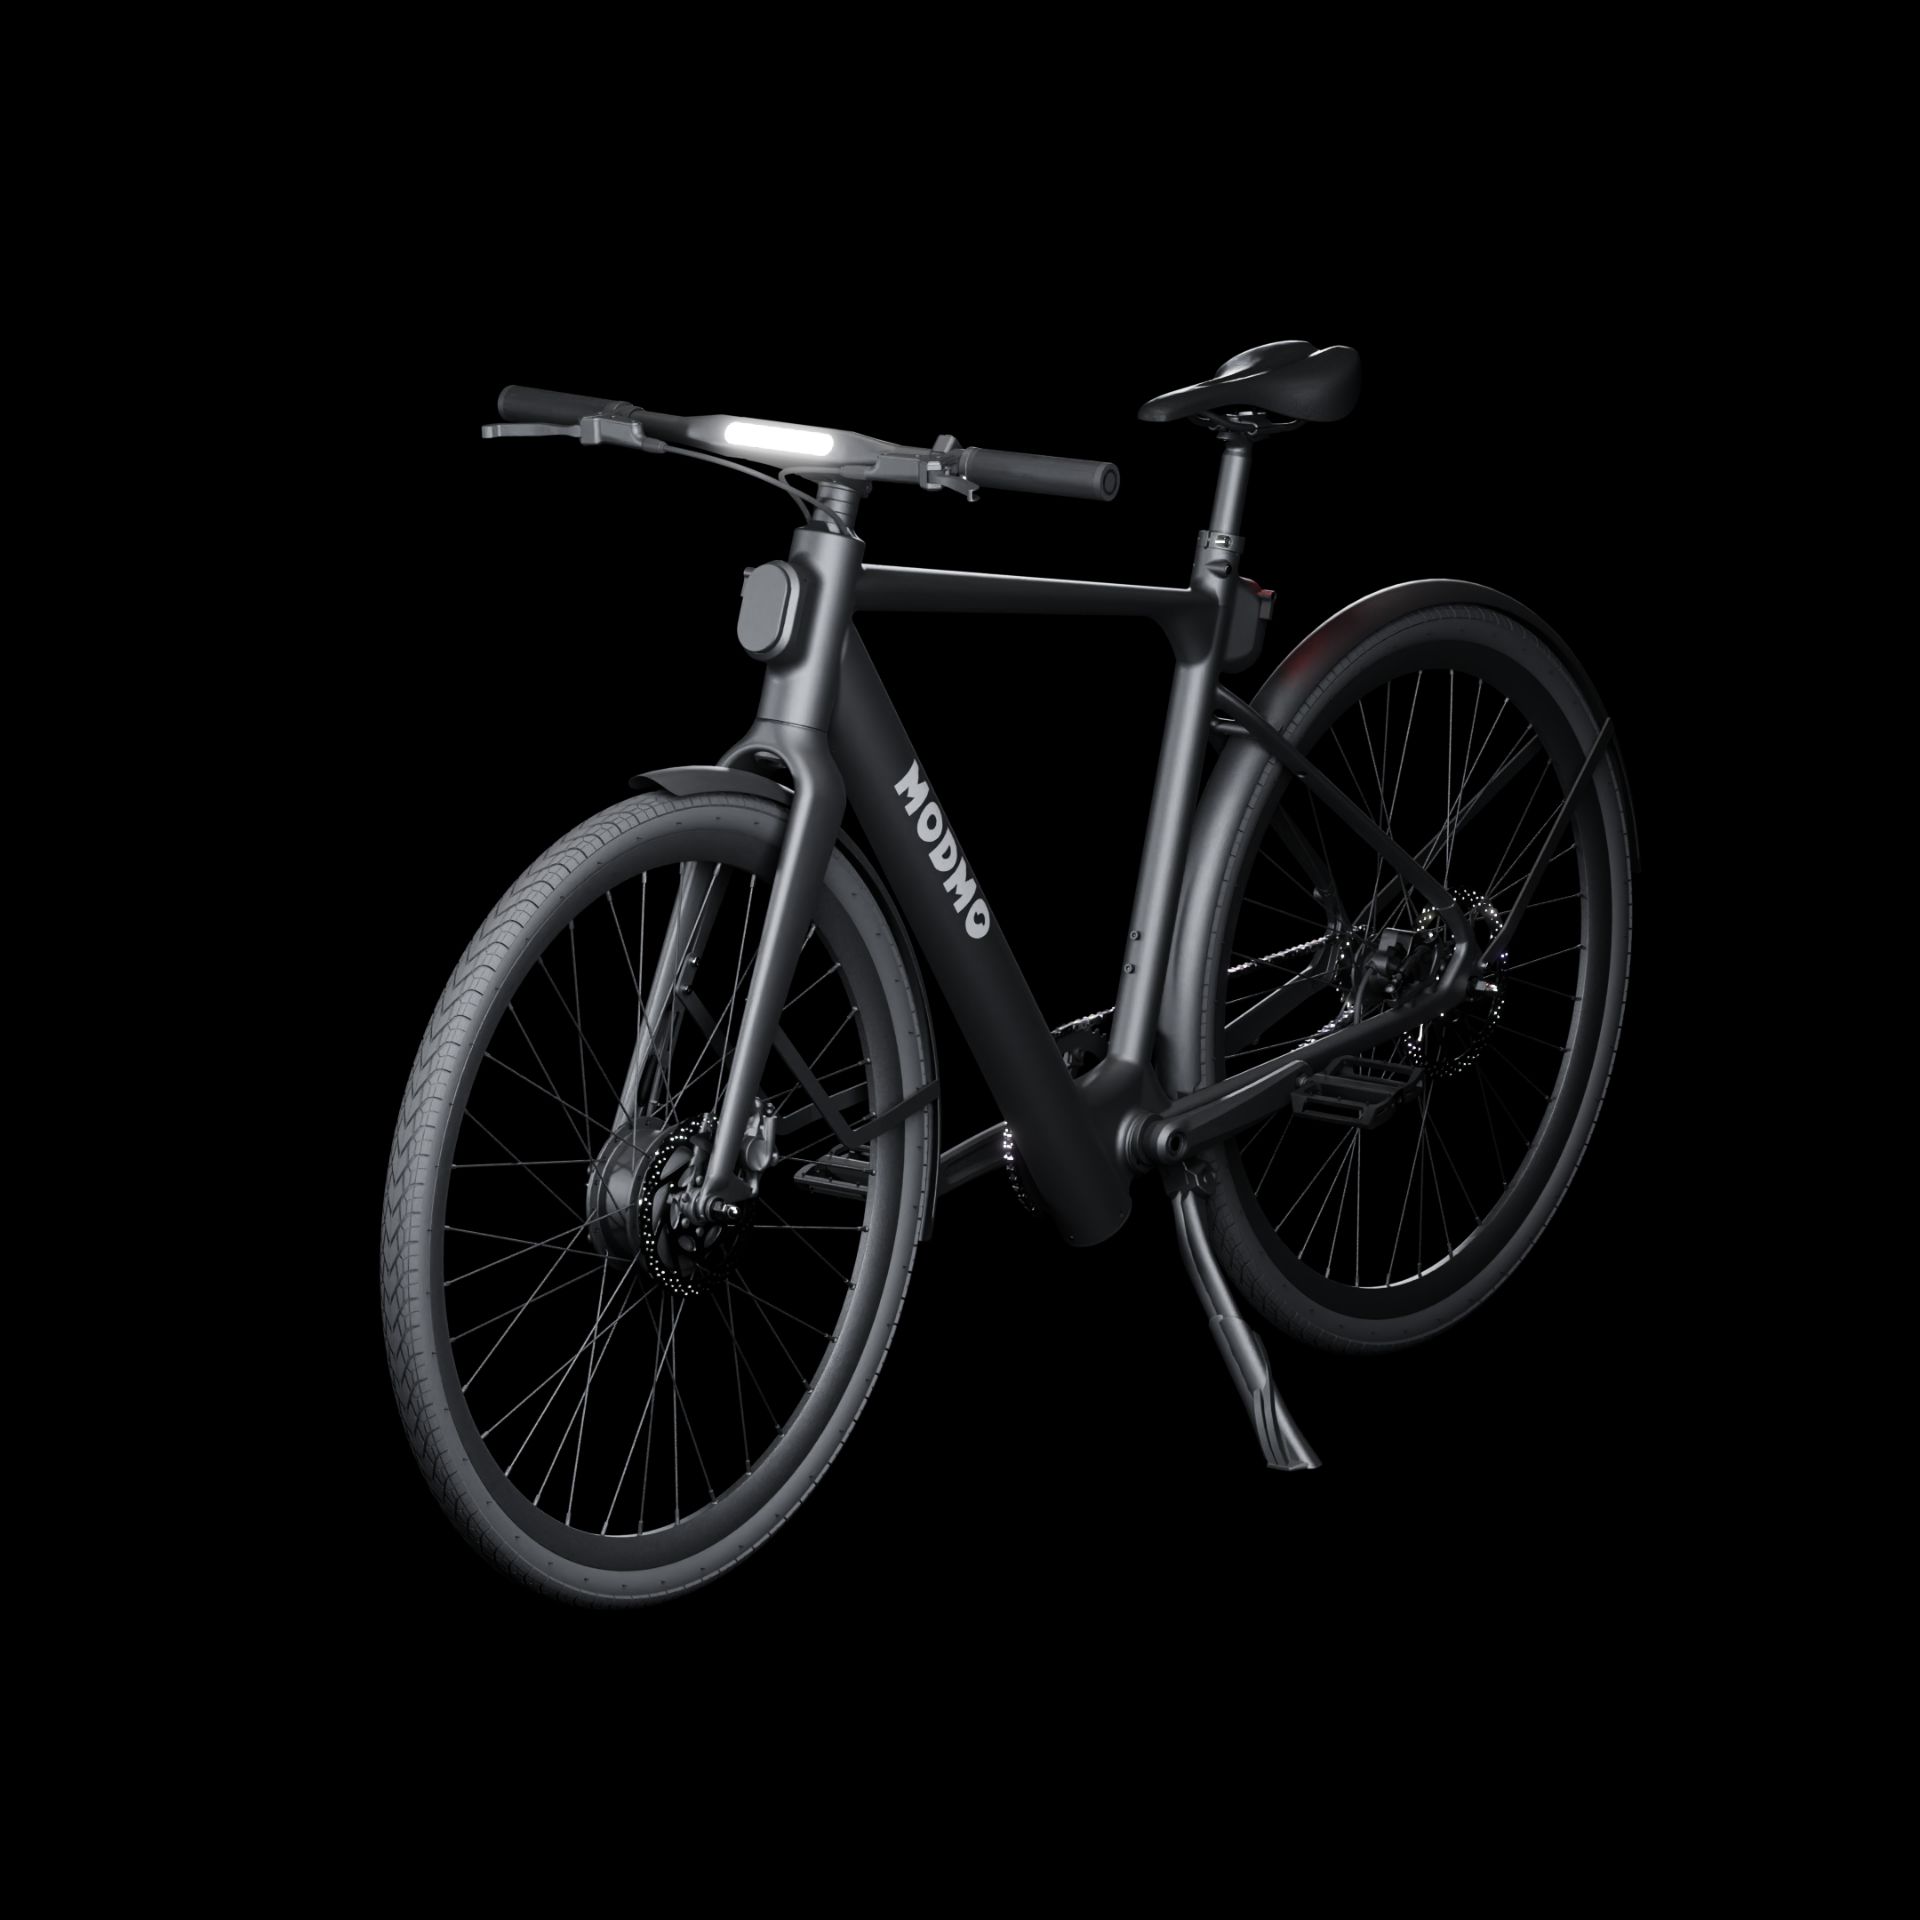 Modmo Saigon+ Electric Bicycle - RRP £2800 - Size L (Rider 175-190cm) - Image 16 of 21